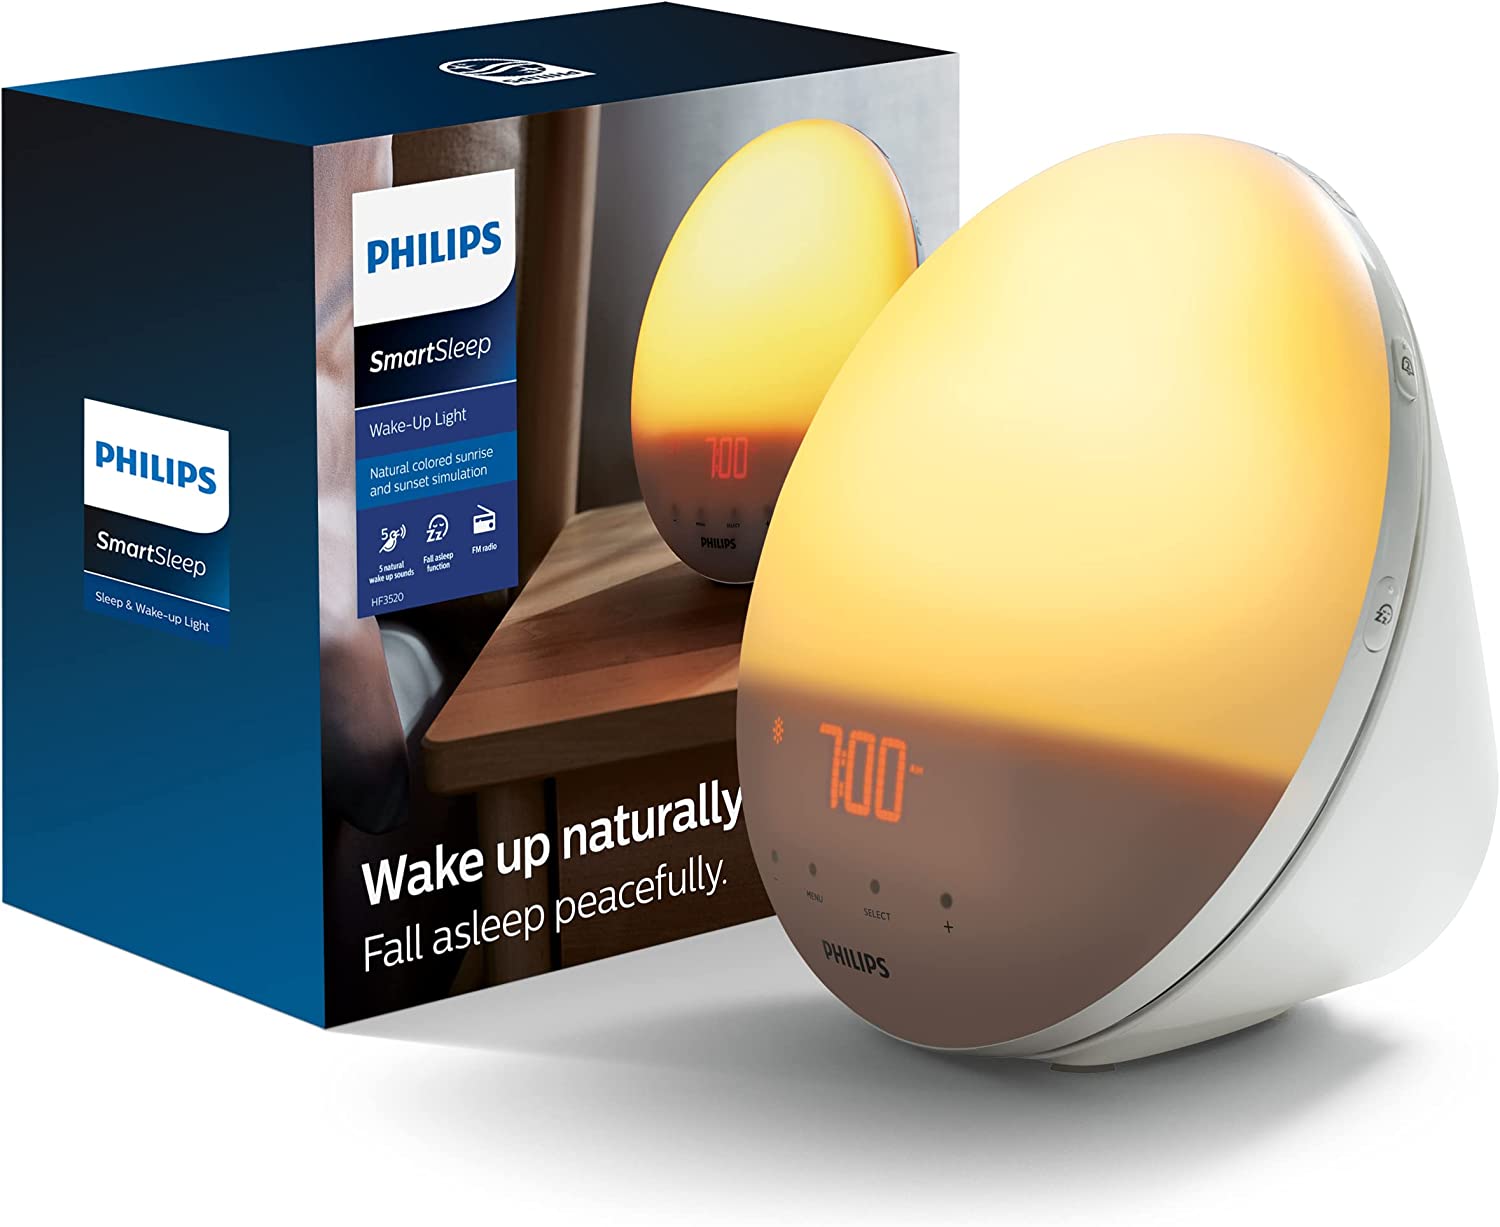 Philips Sunrise Personalized Alarm Clock